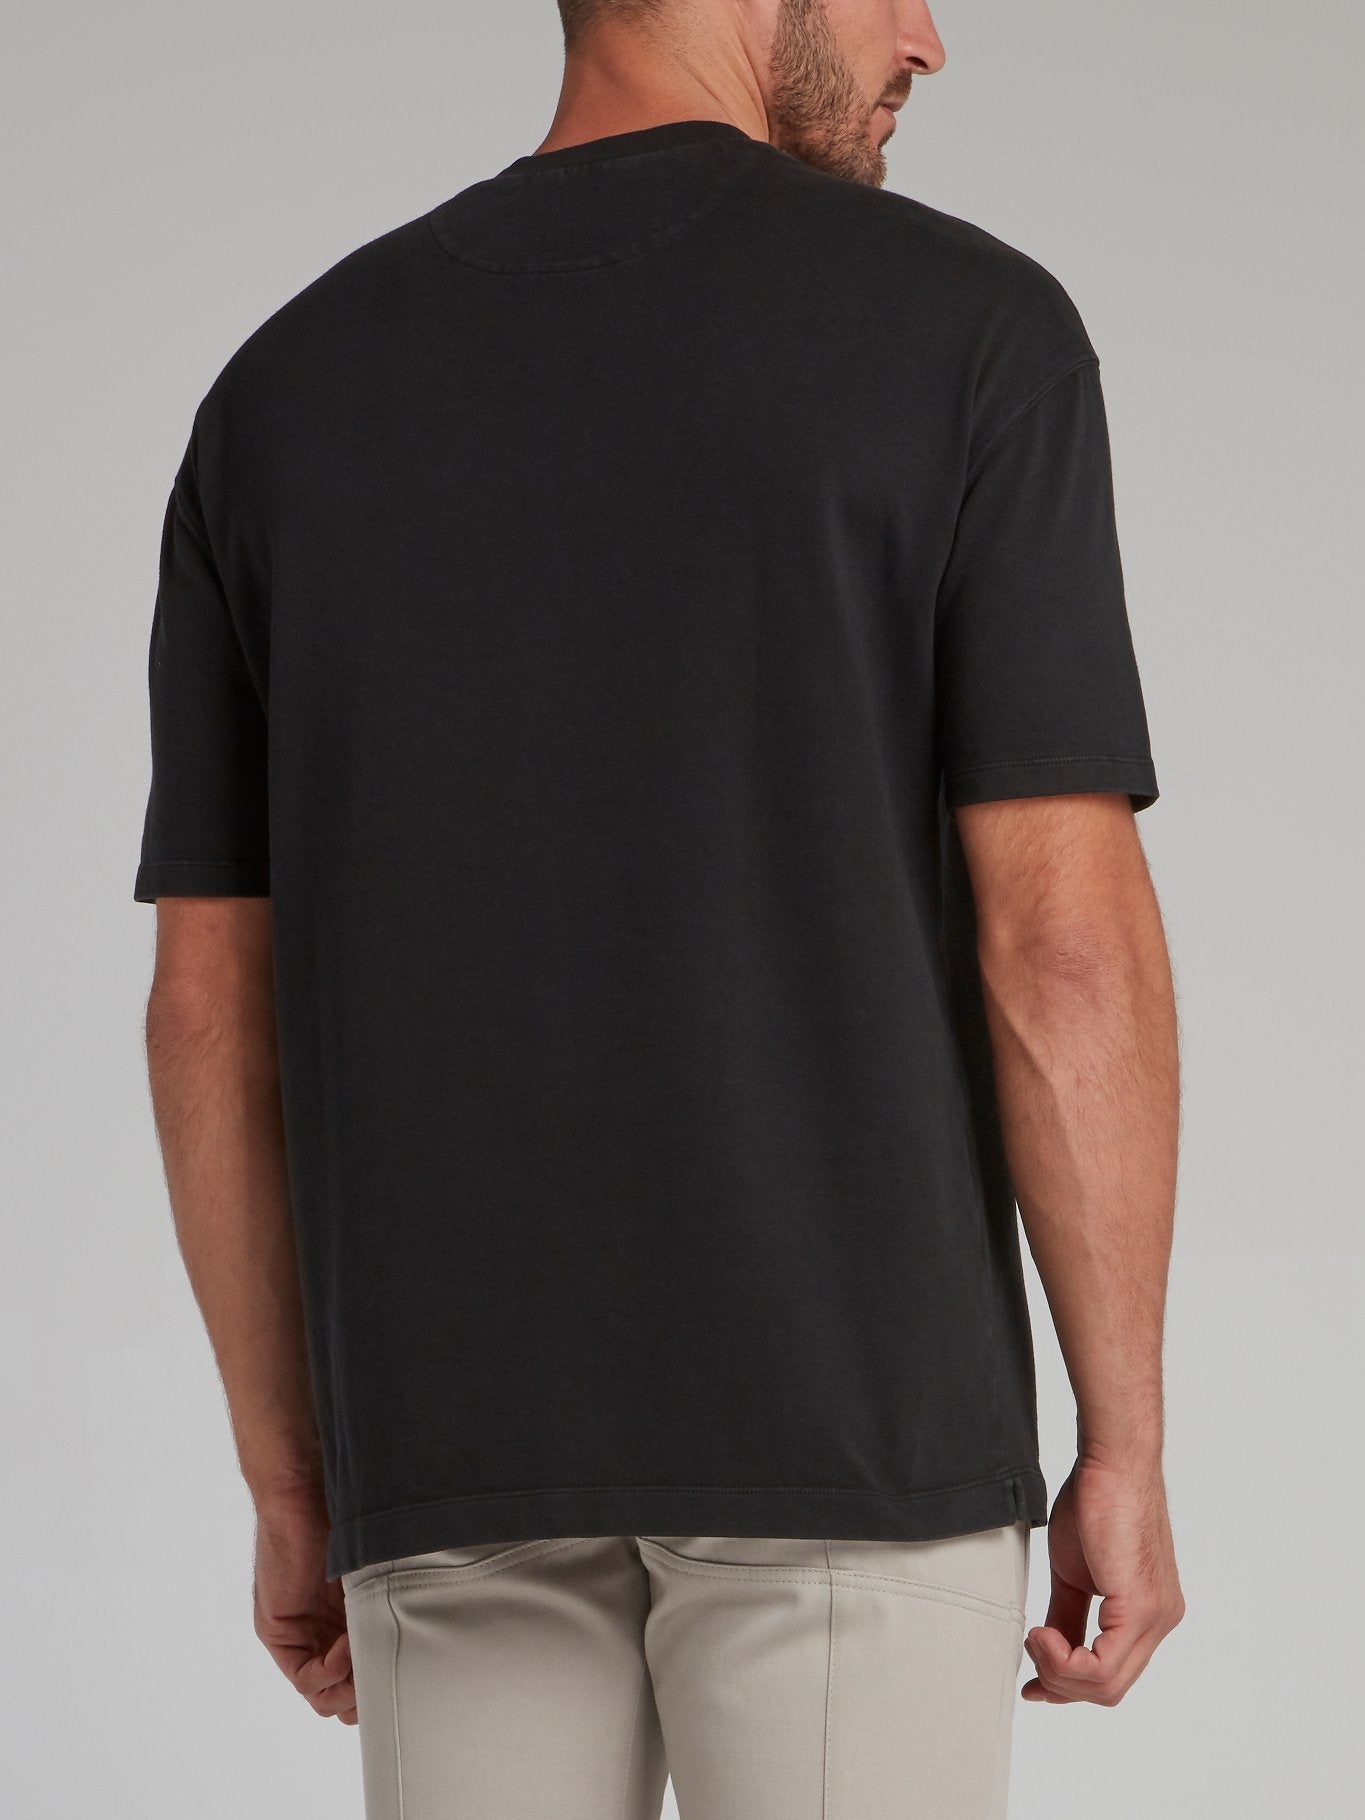 Black Abstract Print Cotton T-Shirt